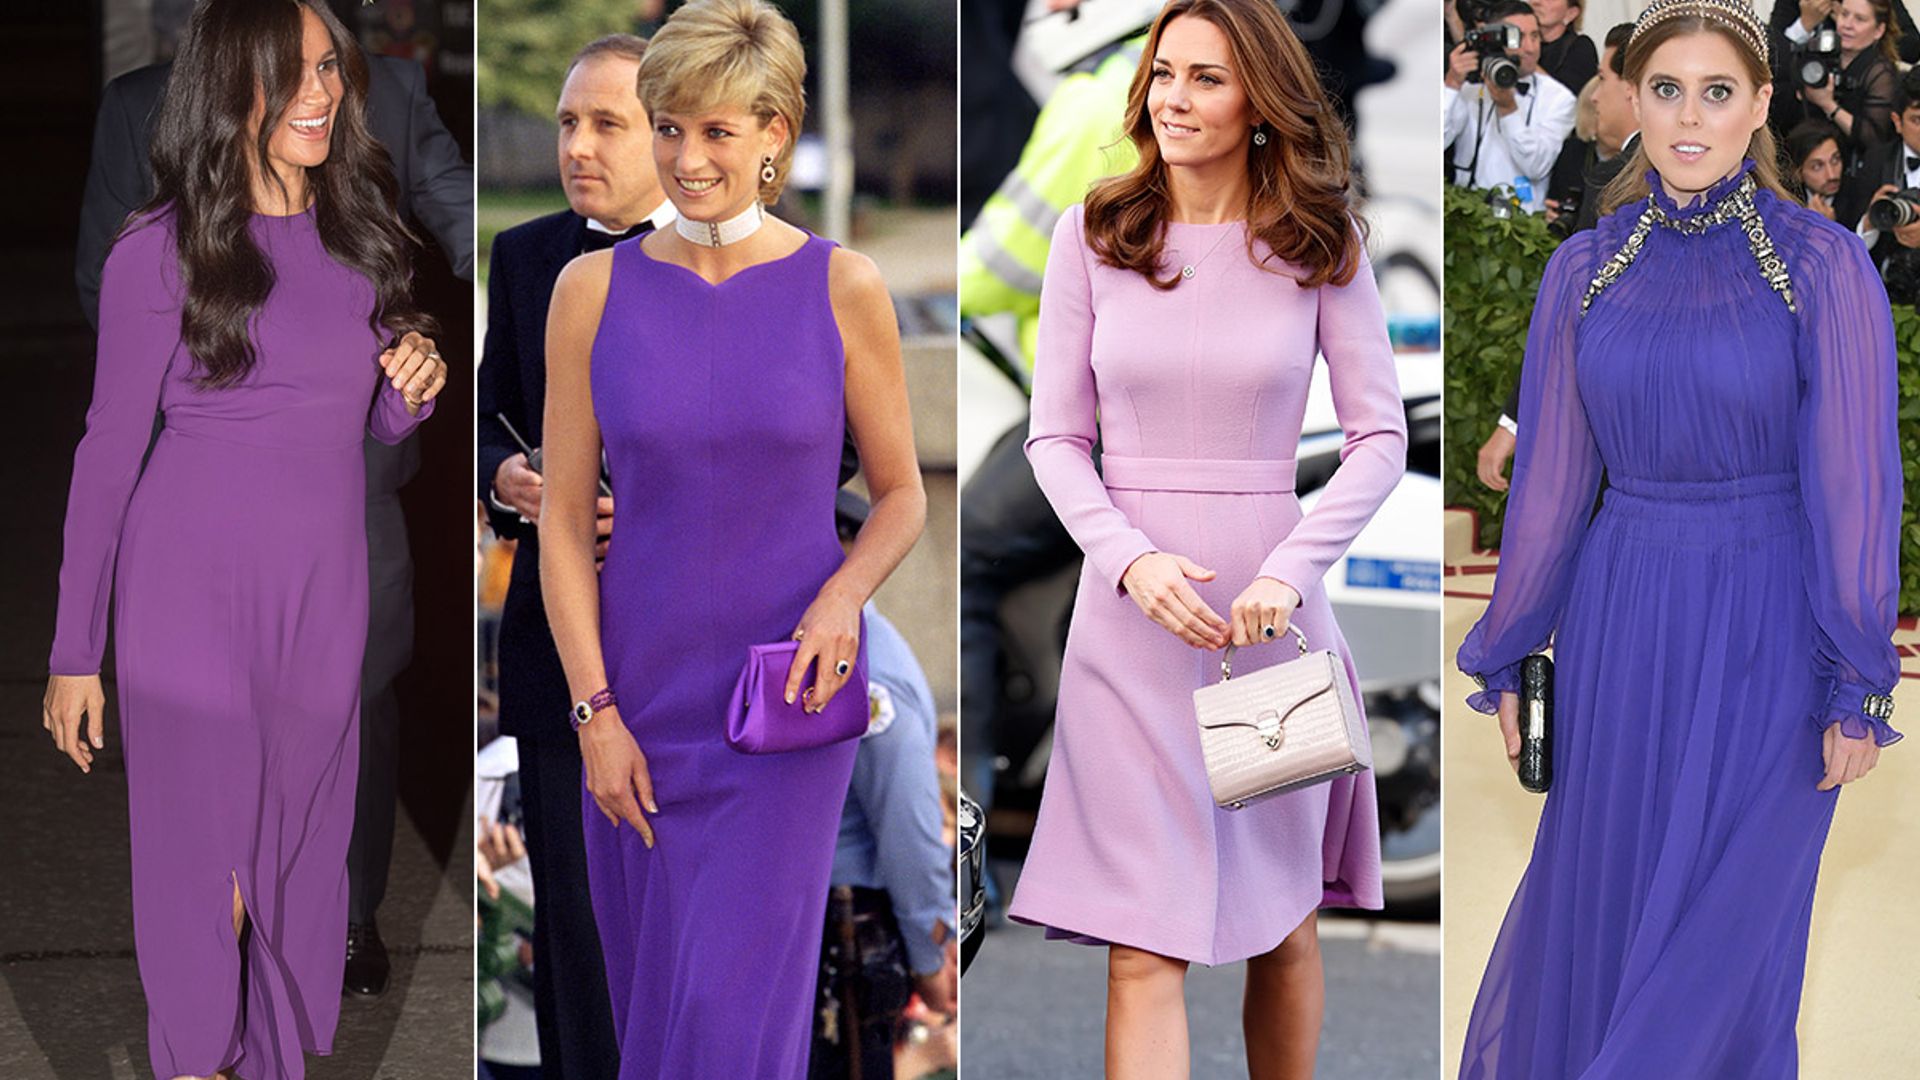 12 royals wearing purple: Princess Kate, Princess Diana and more